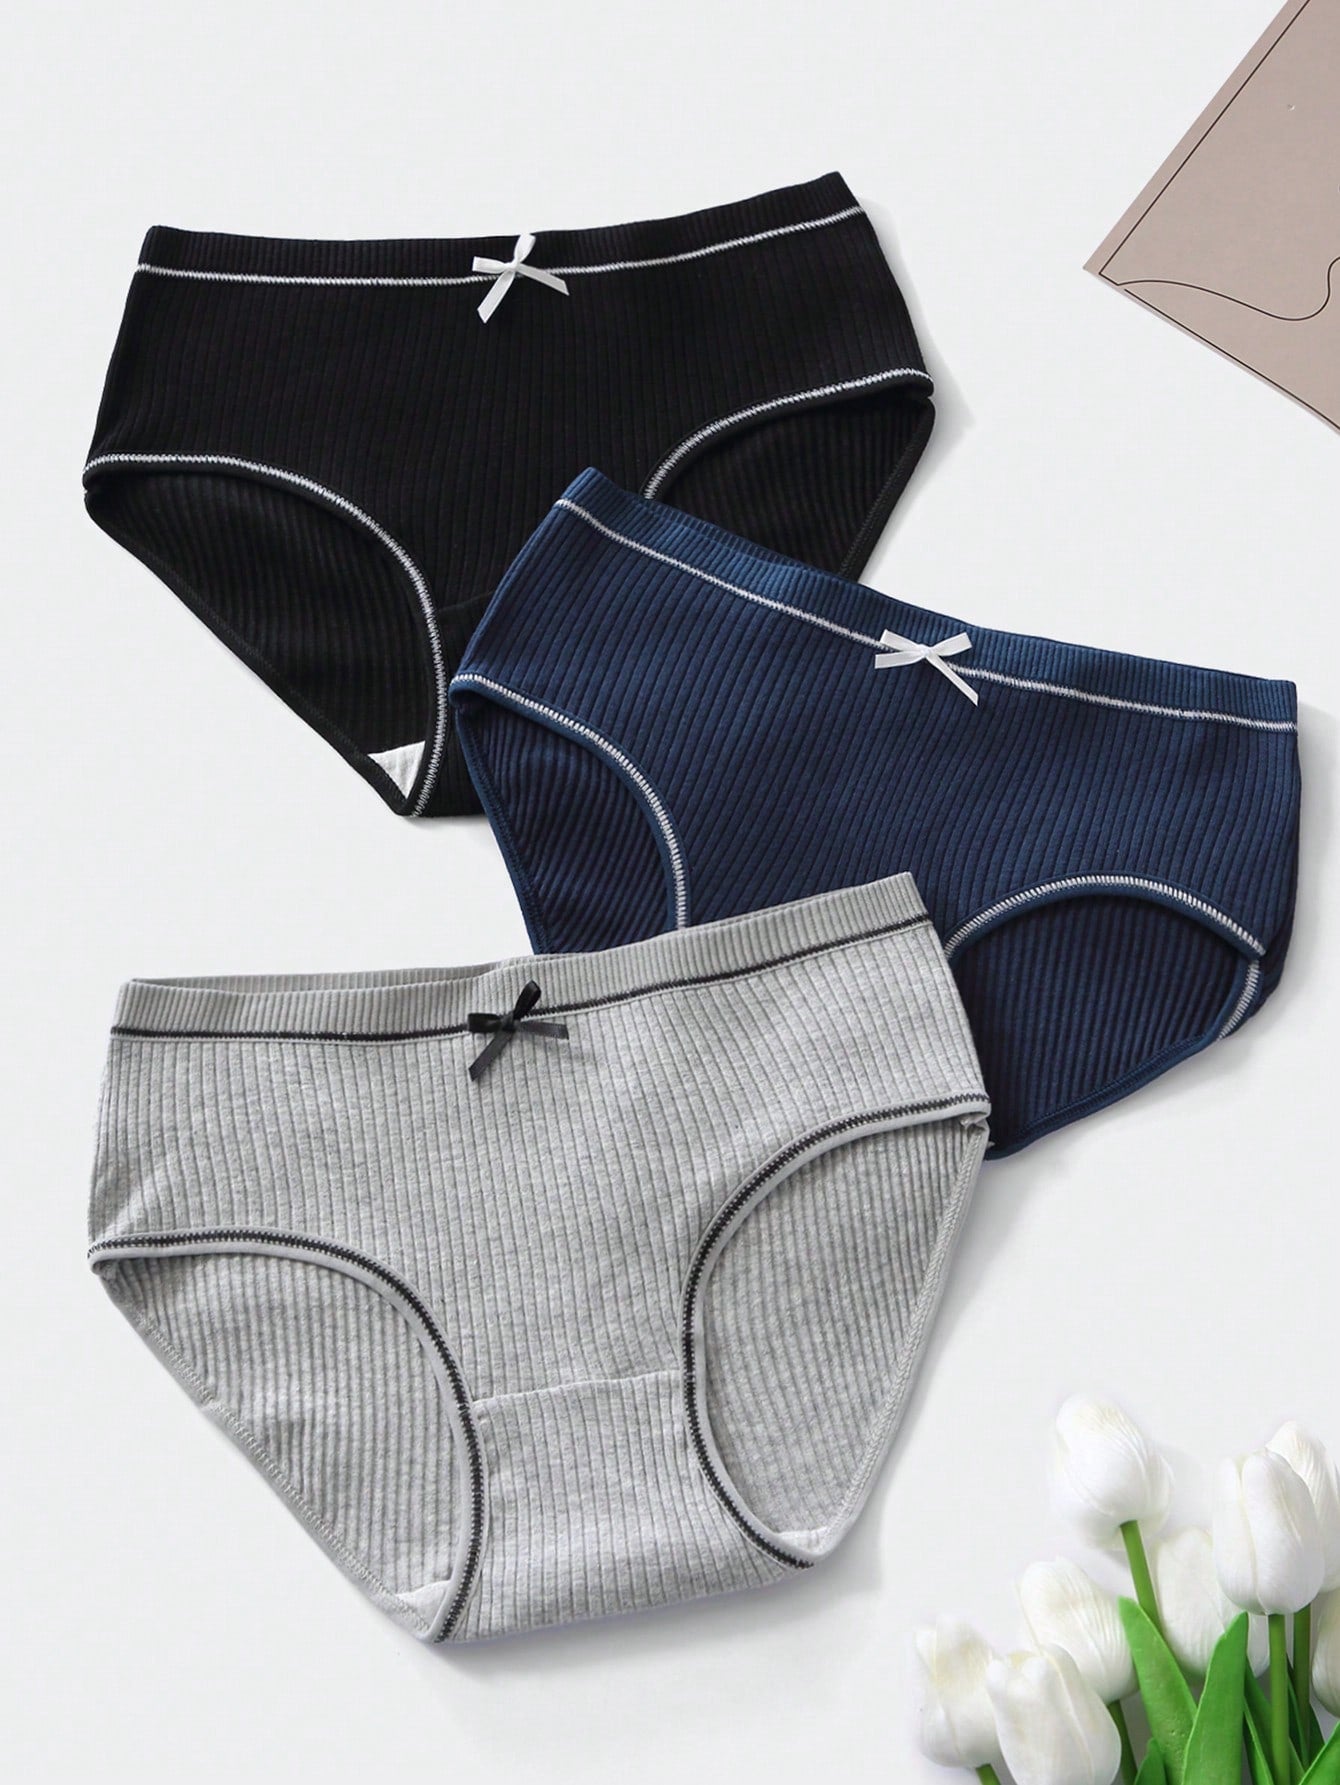 SHEIN Women's 3packs Letter Tape Underpants Briefs Soft Underwear Panty Set  Multicolor M